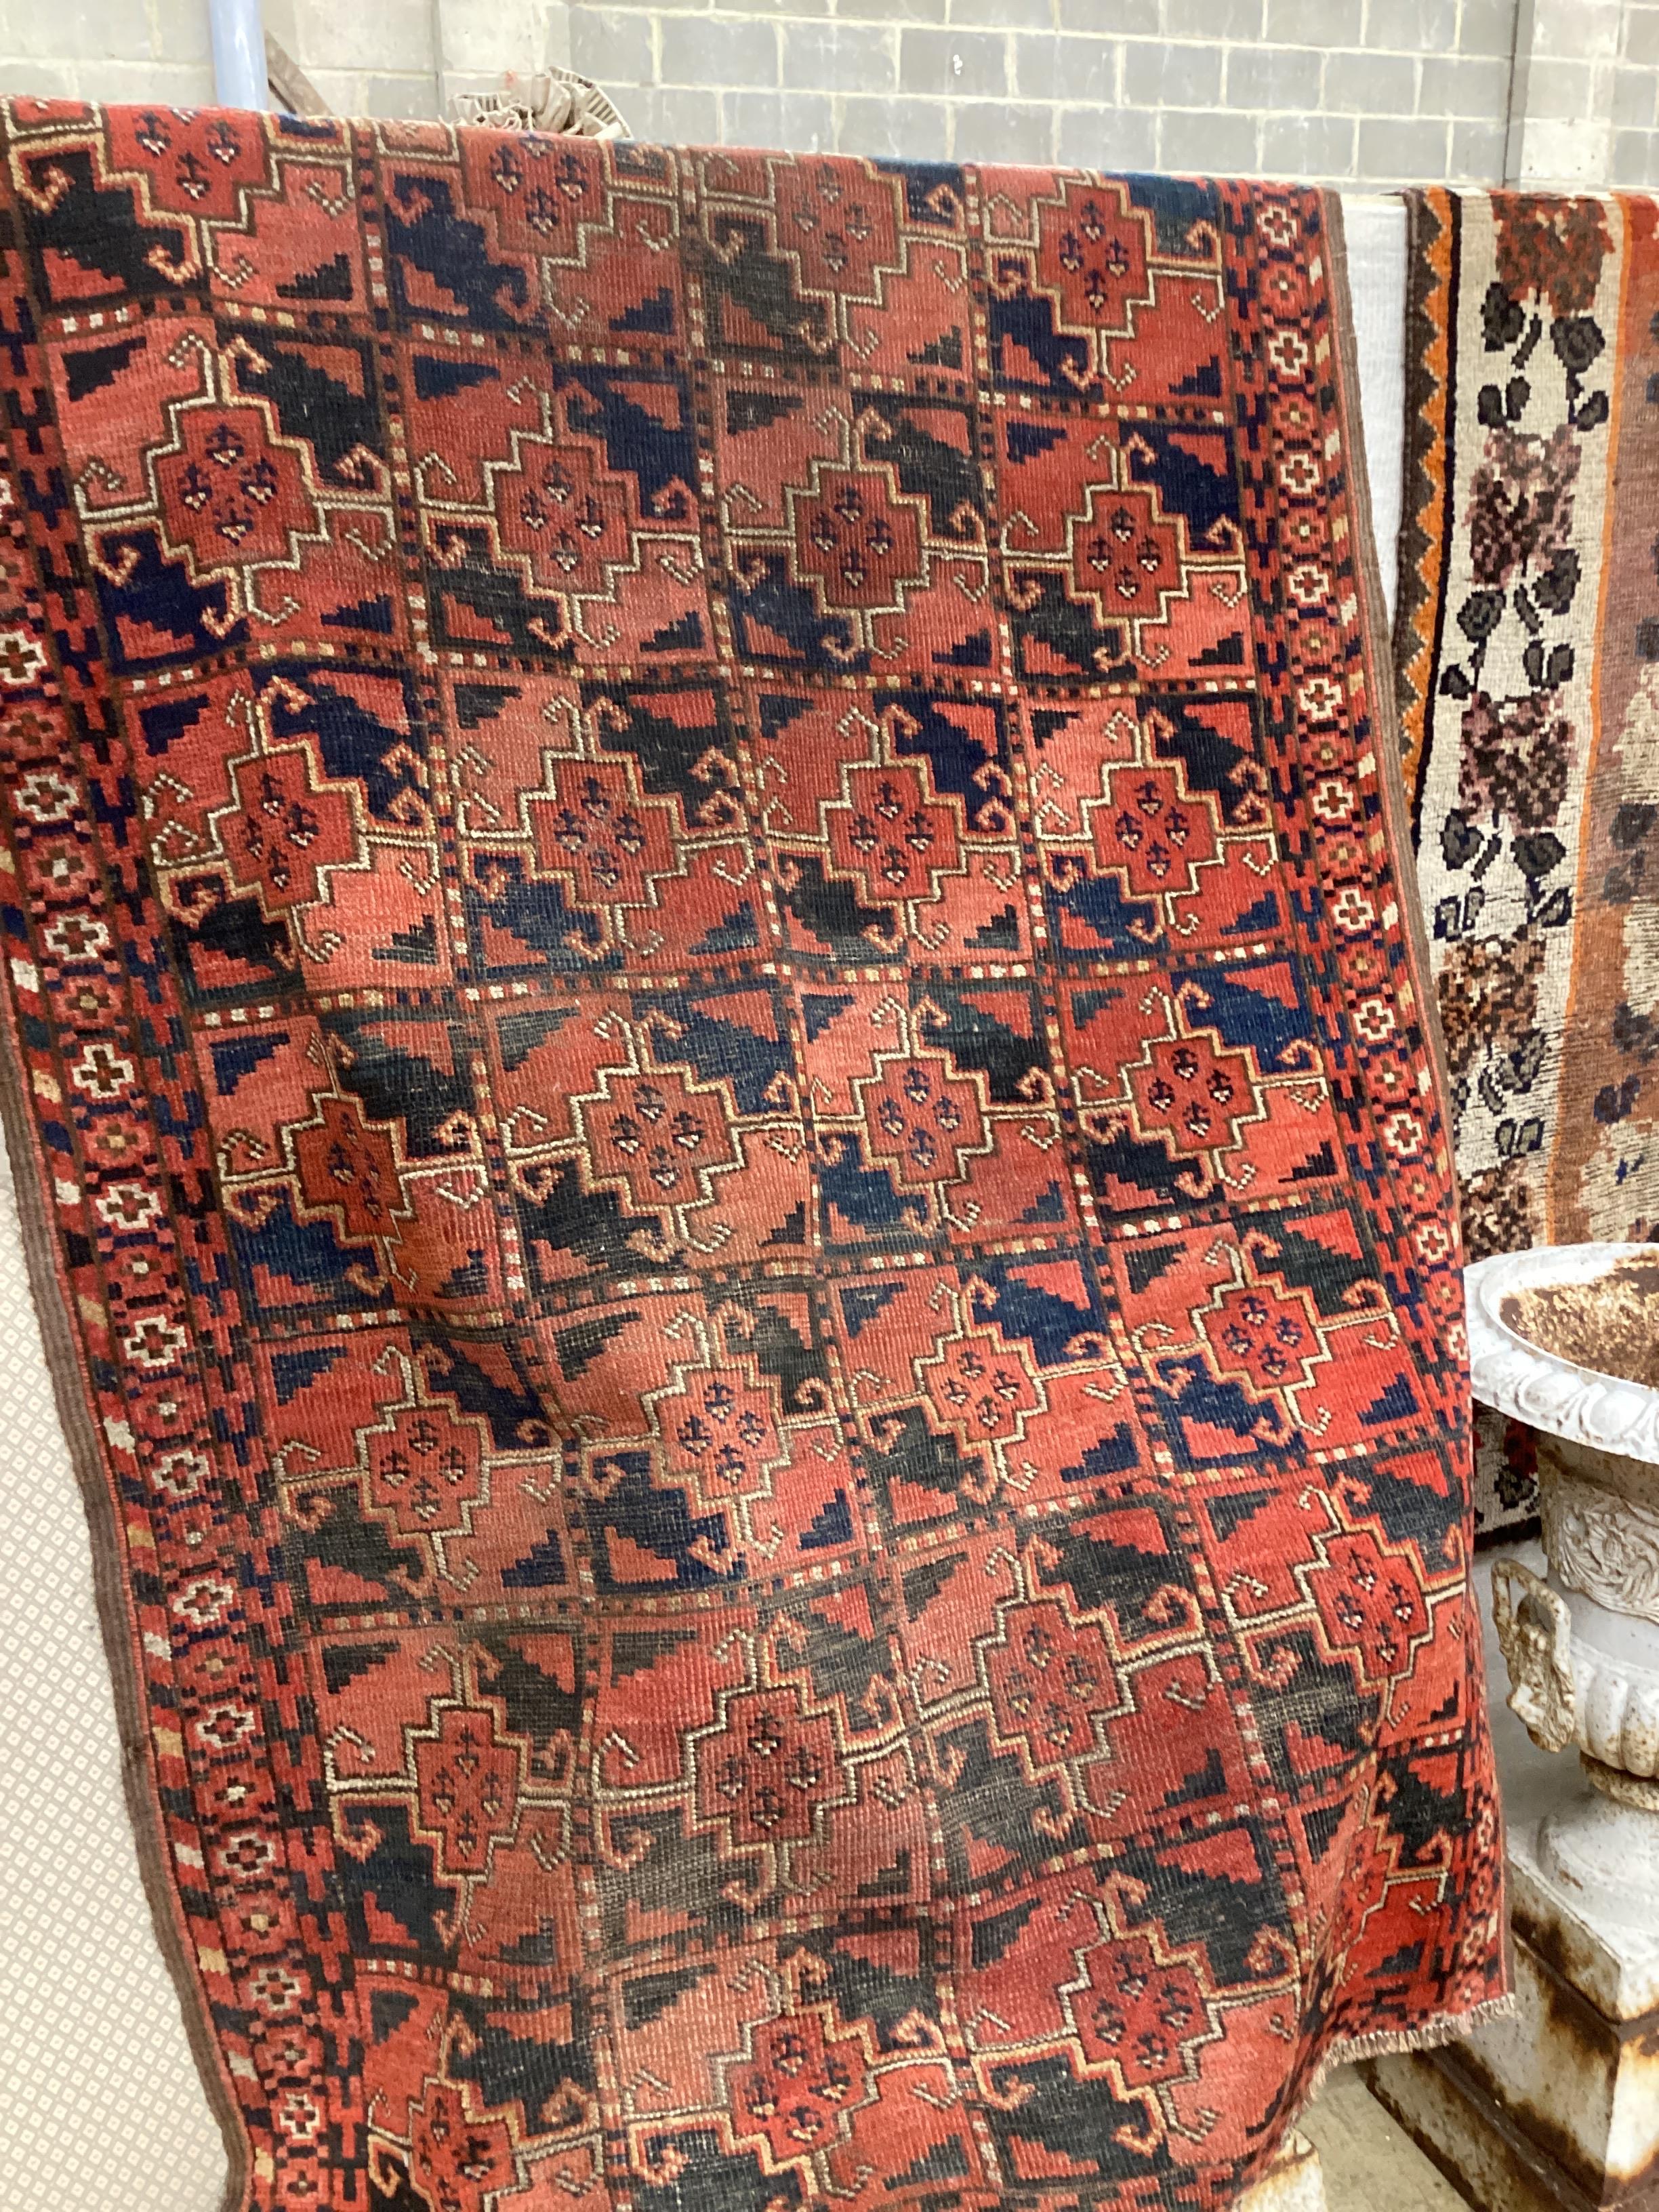 An antique Beshir Turkoman red ground rug 200cm x 109cm.